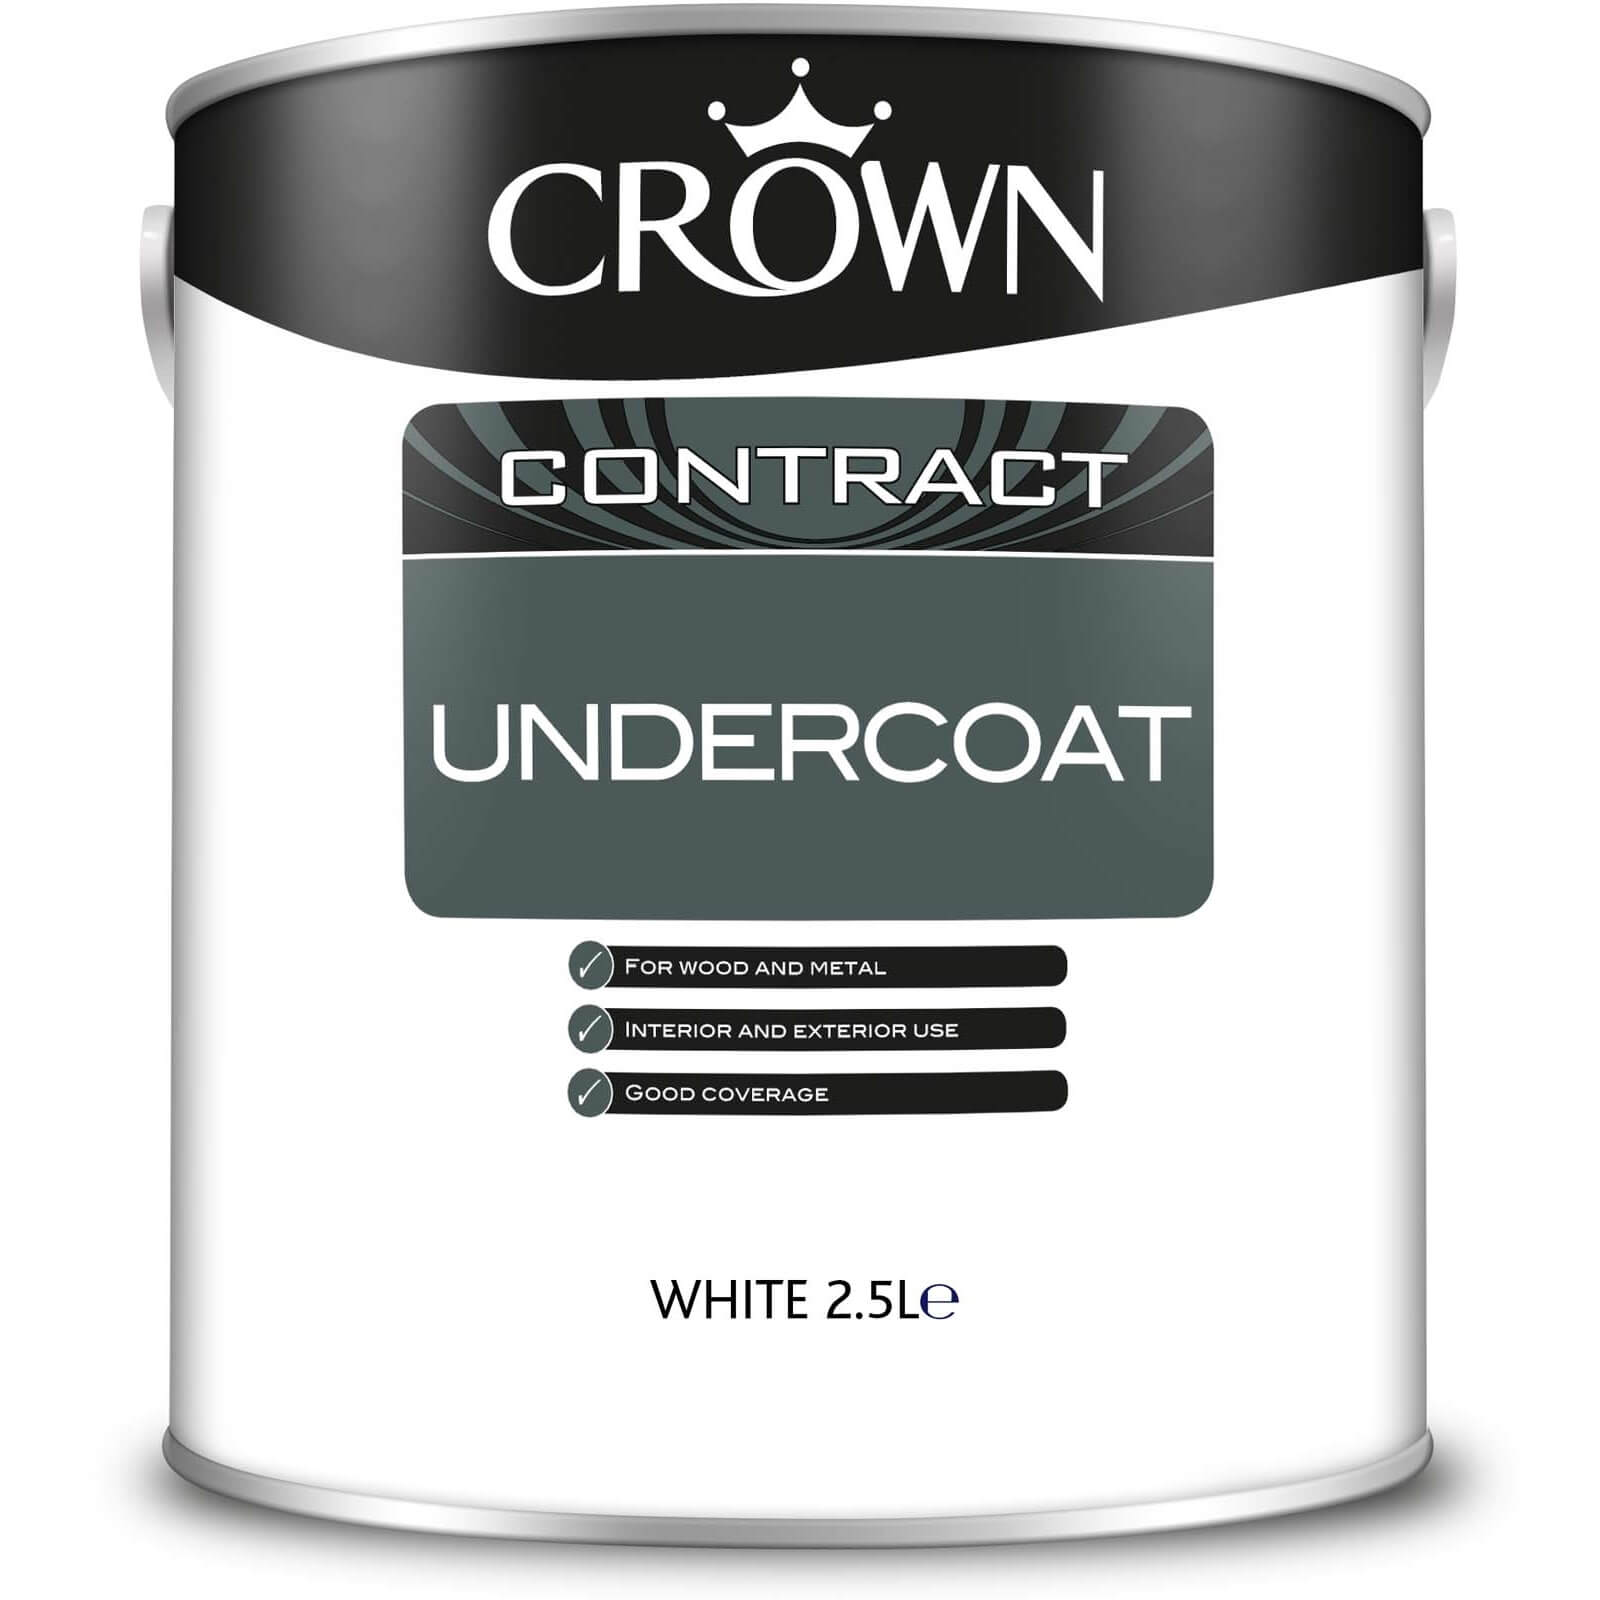 Crown Contract Undercoat White Paint - 2.5L